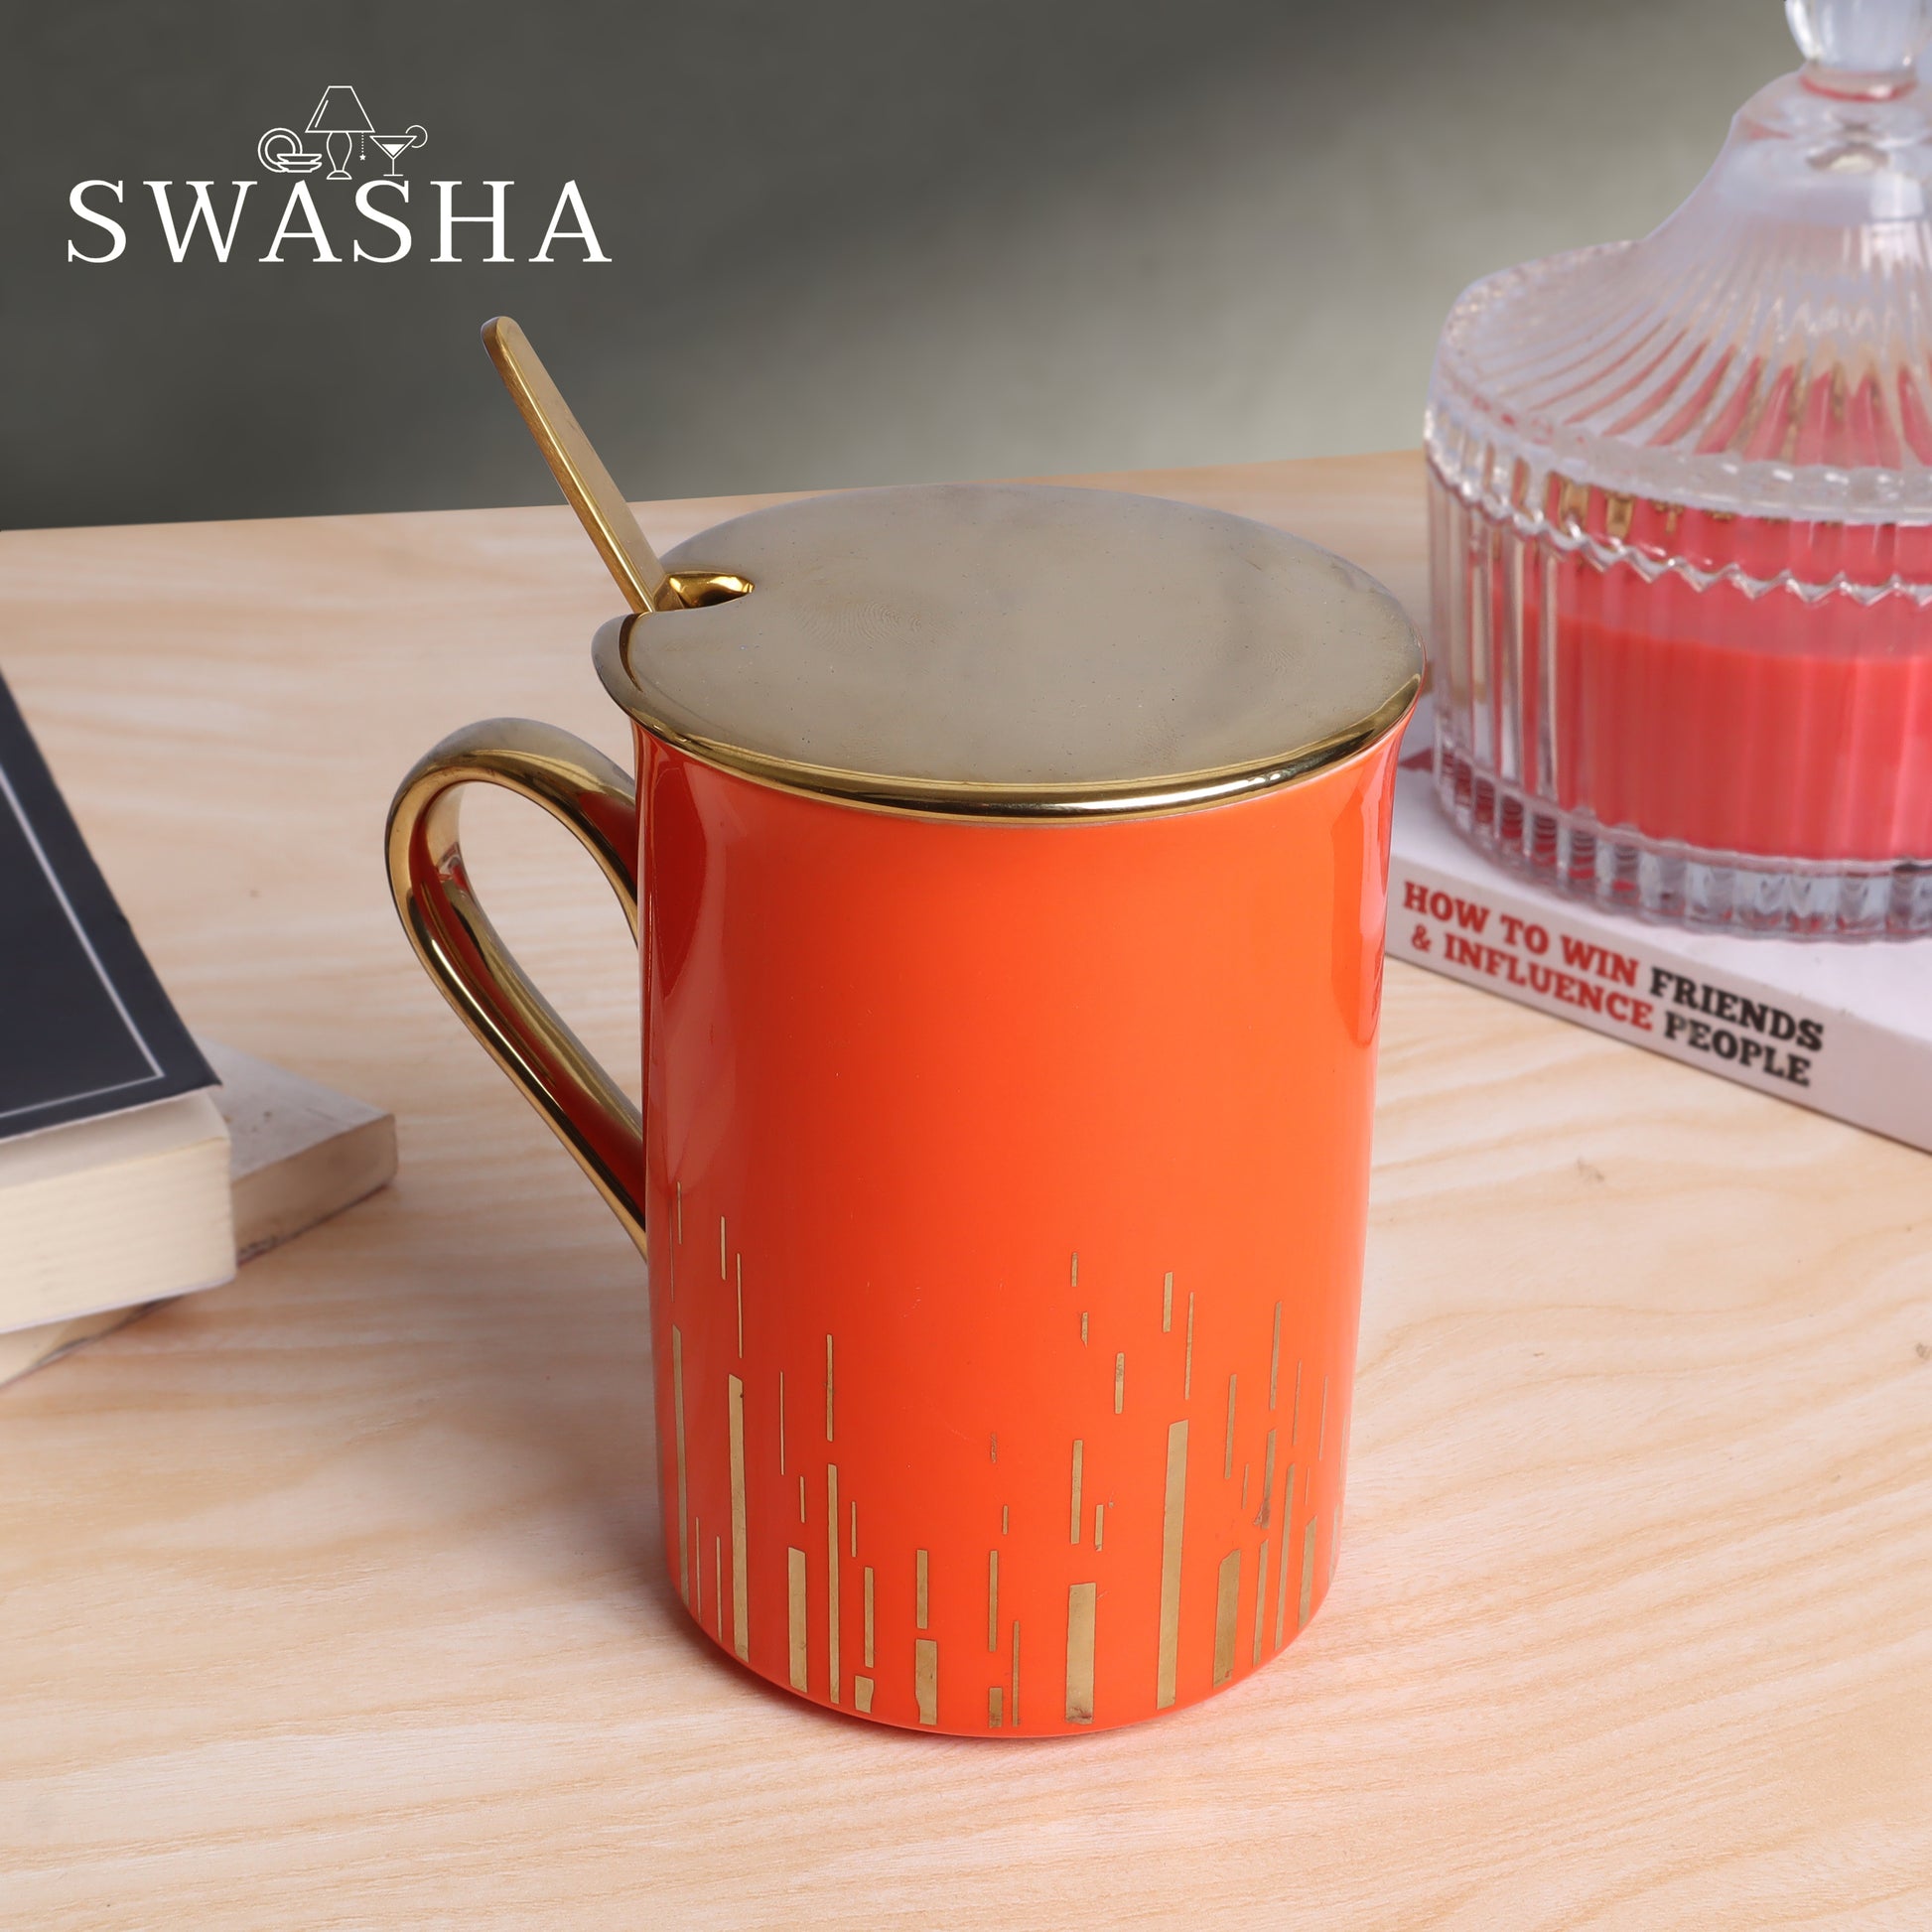 Ceramic Tall Coffee Mug With Lid And Spoon